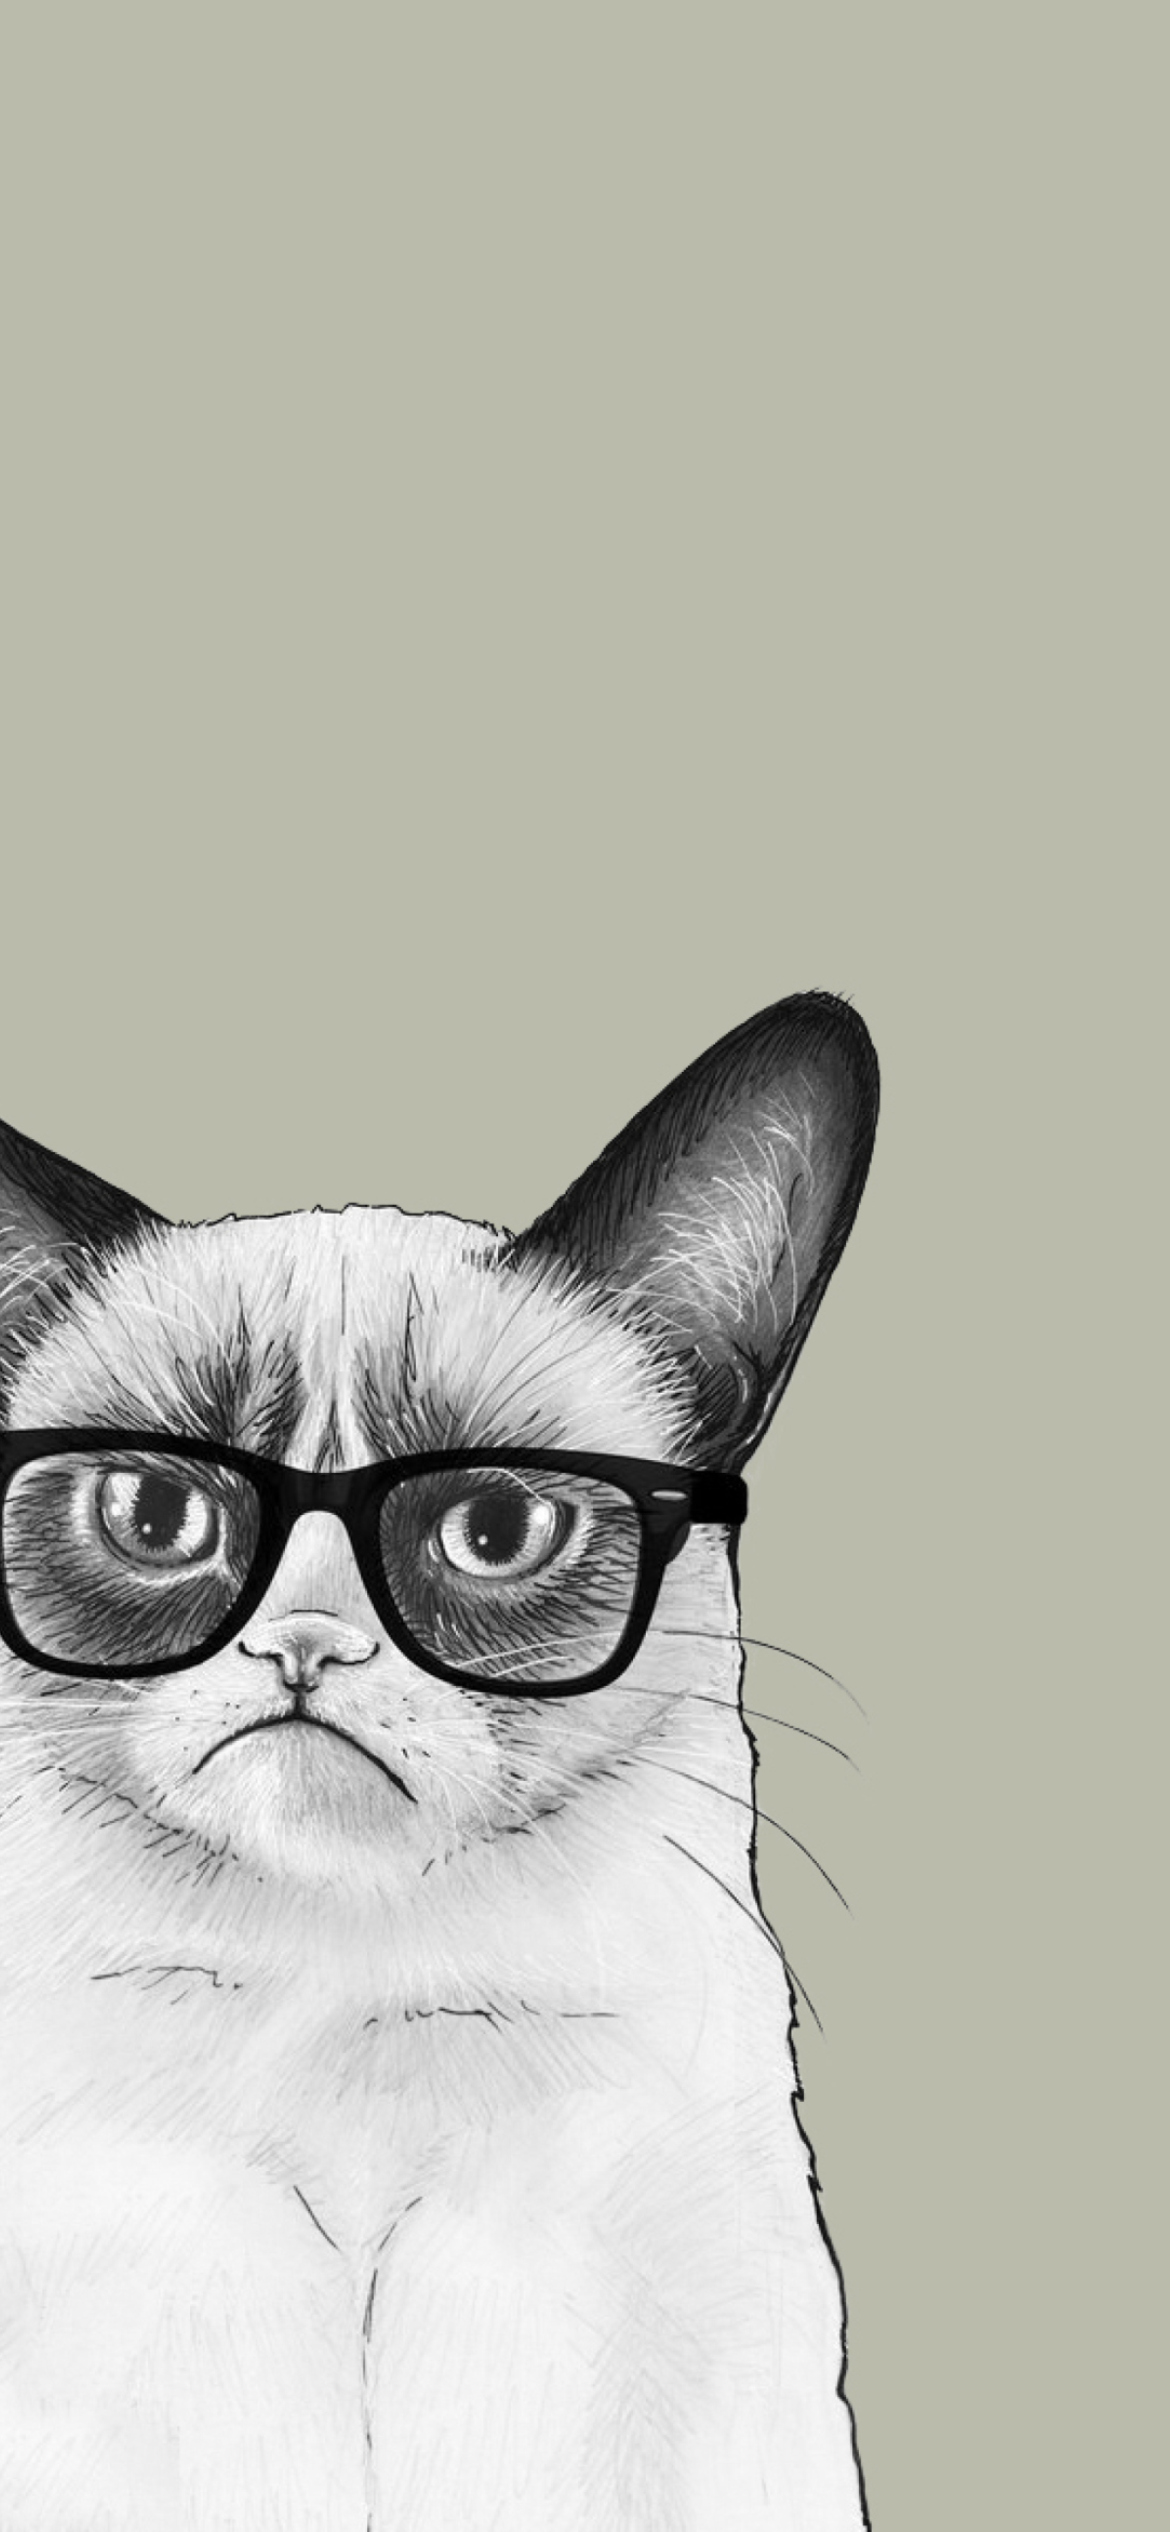 grumpy cat iphone wallpaper